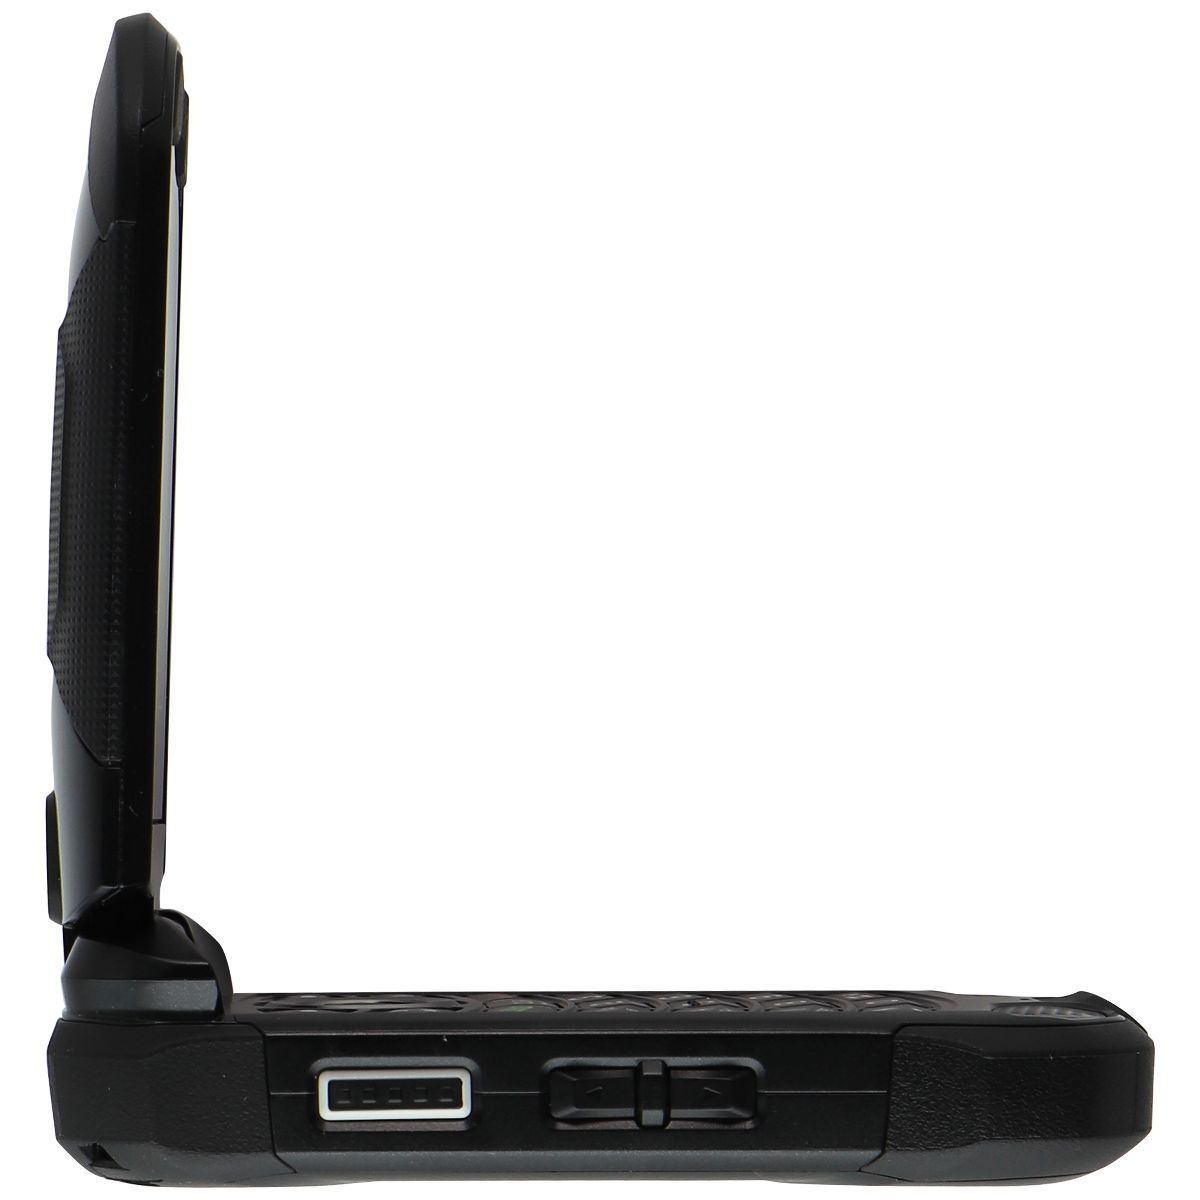 Kyocera DuraXA Equip (2.6-inch) Flip Phone (E4831) Unlocked - 16GB/Black